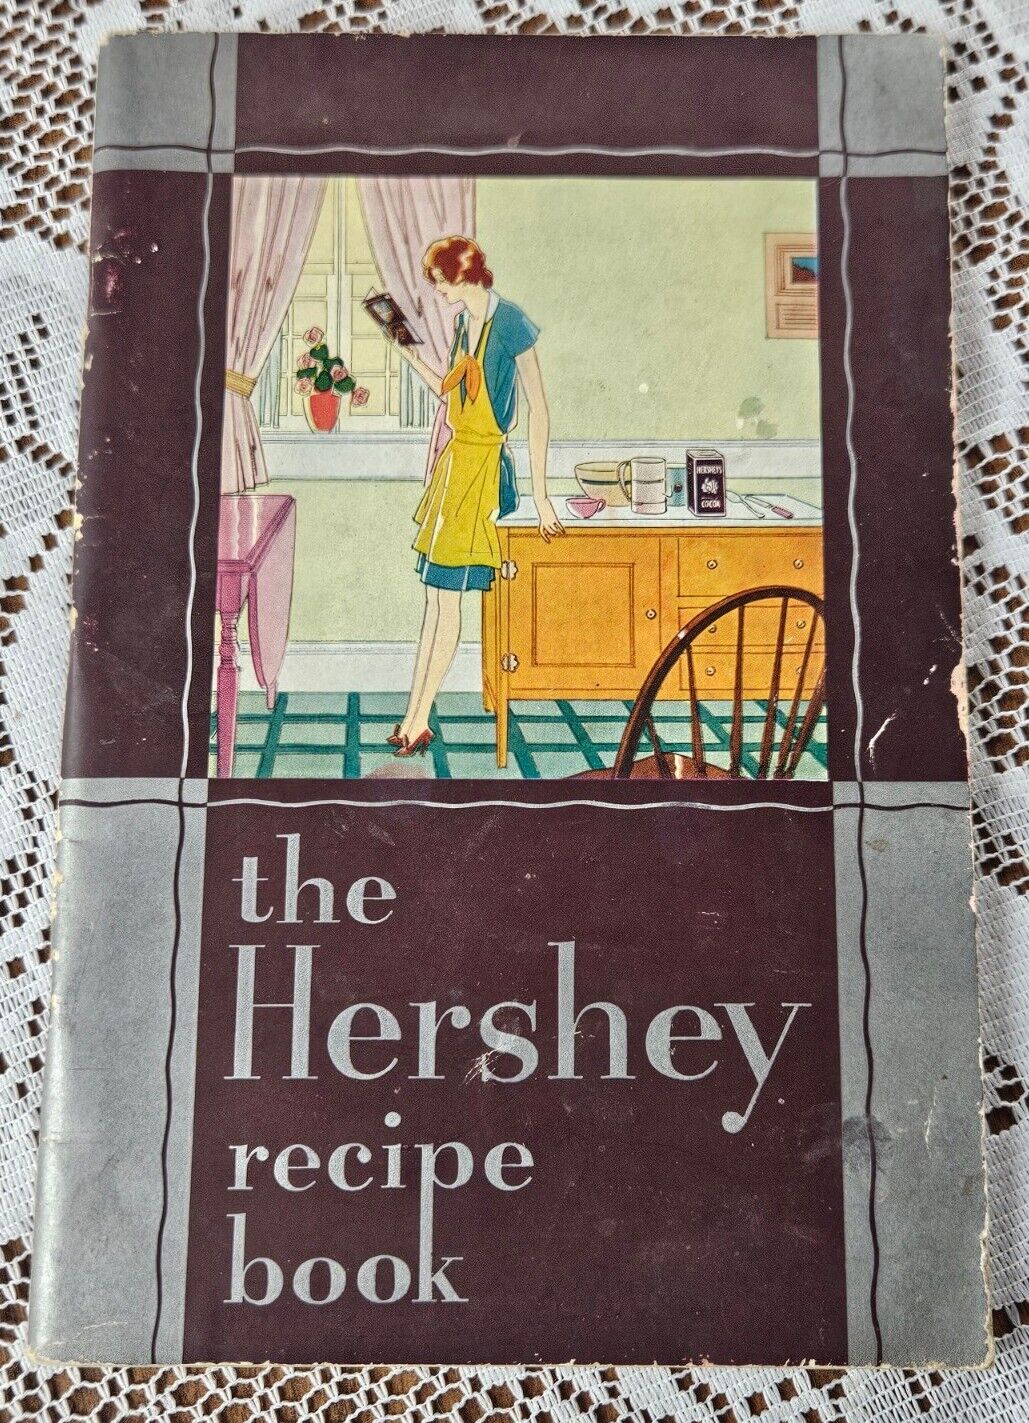 1930 THE HERSHEY RECIPE BOOK ANTIQUE COOKBOOK VINTAGE ADVERTISEMENT CHOCOLATE